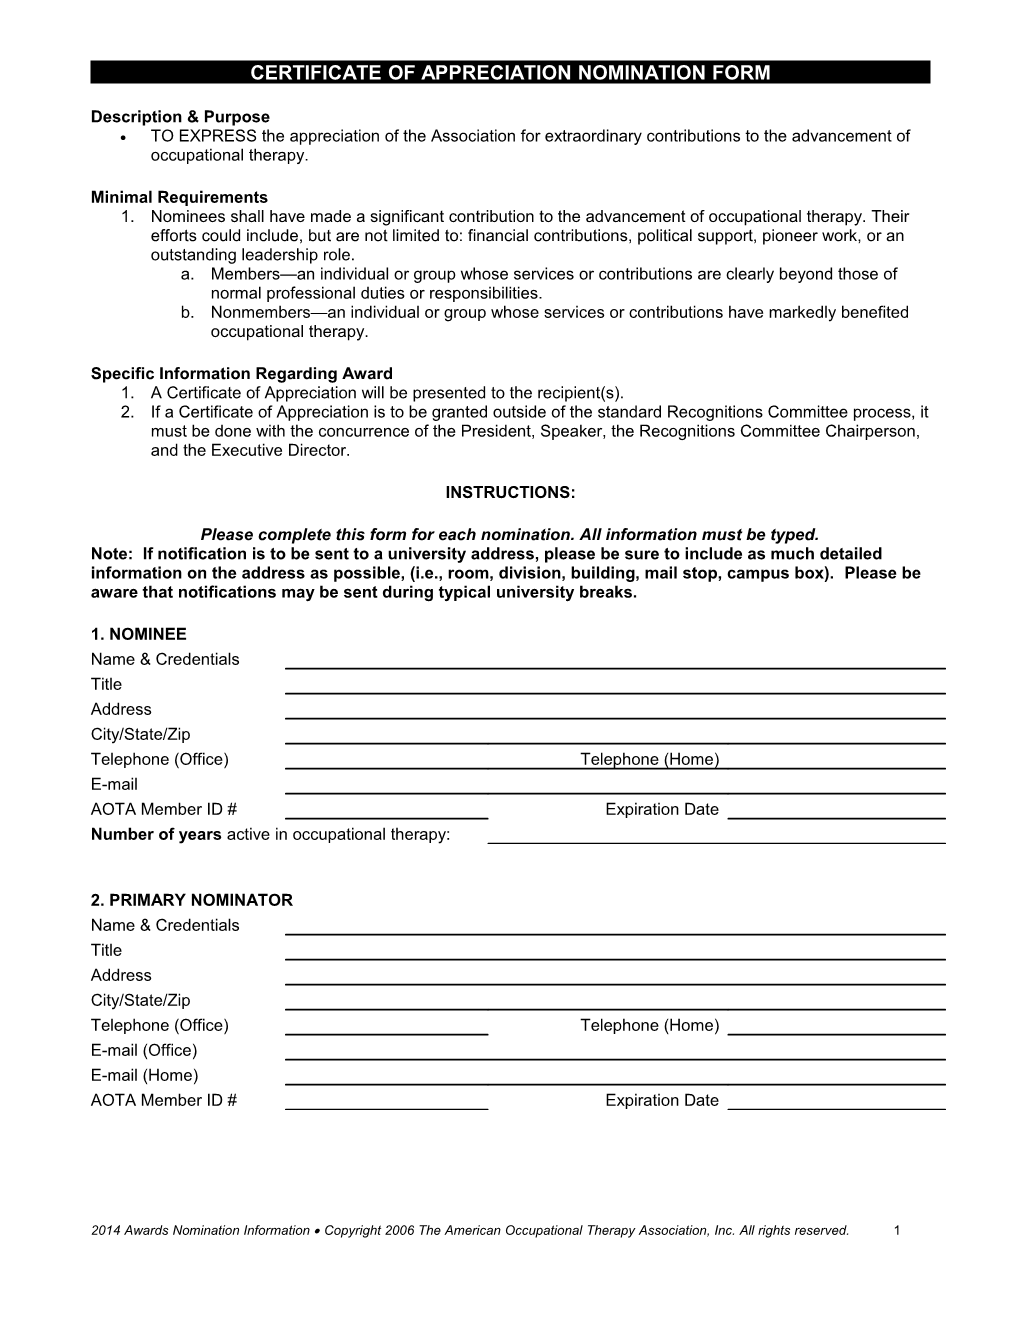 Certificate of Appreciation Nomination Form